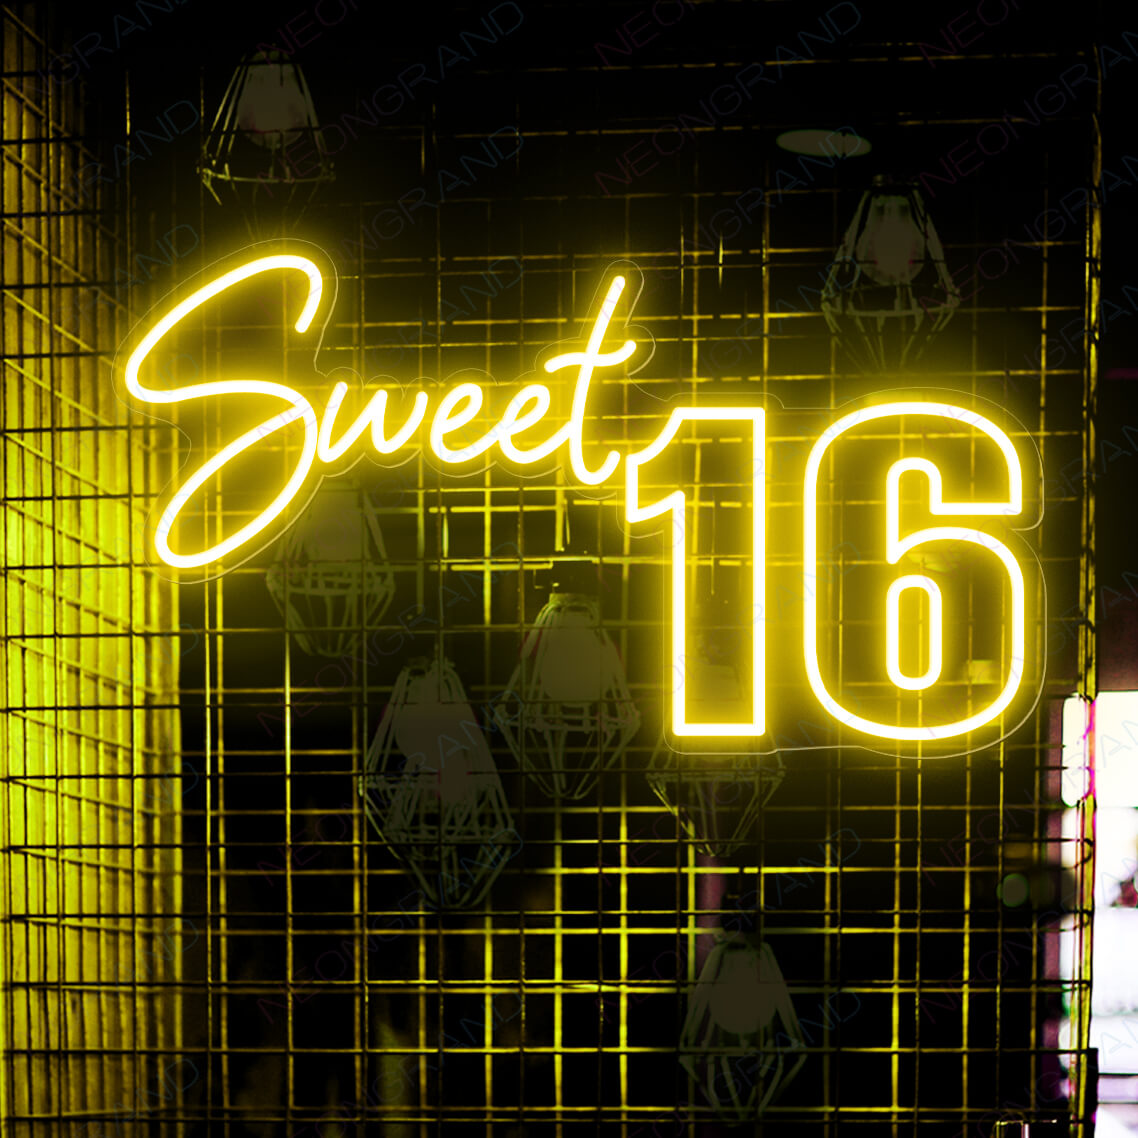 sweet 16 neon party ideas